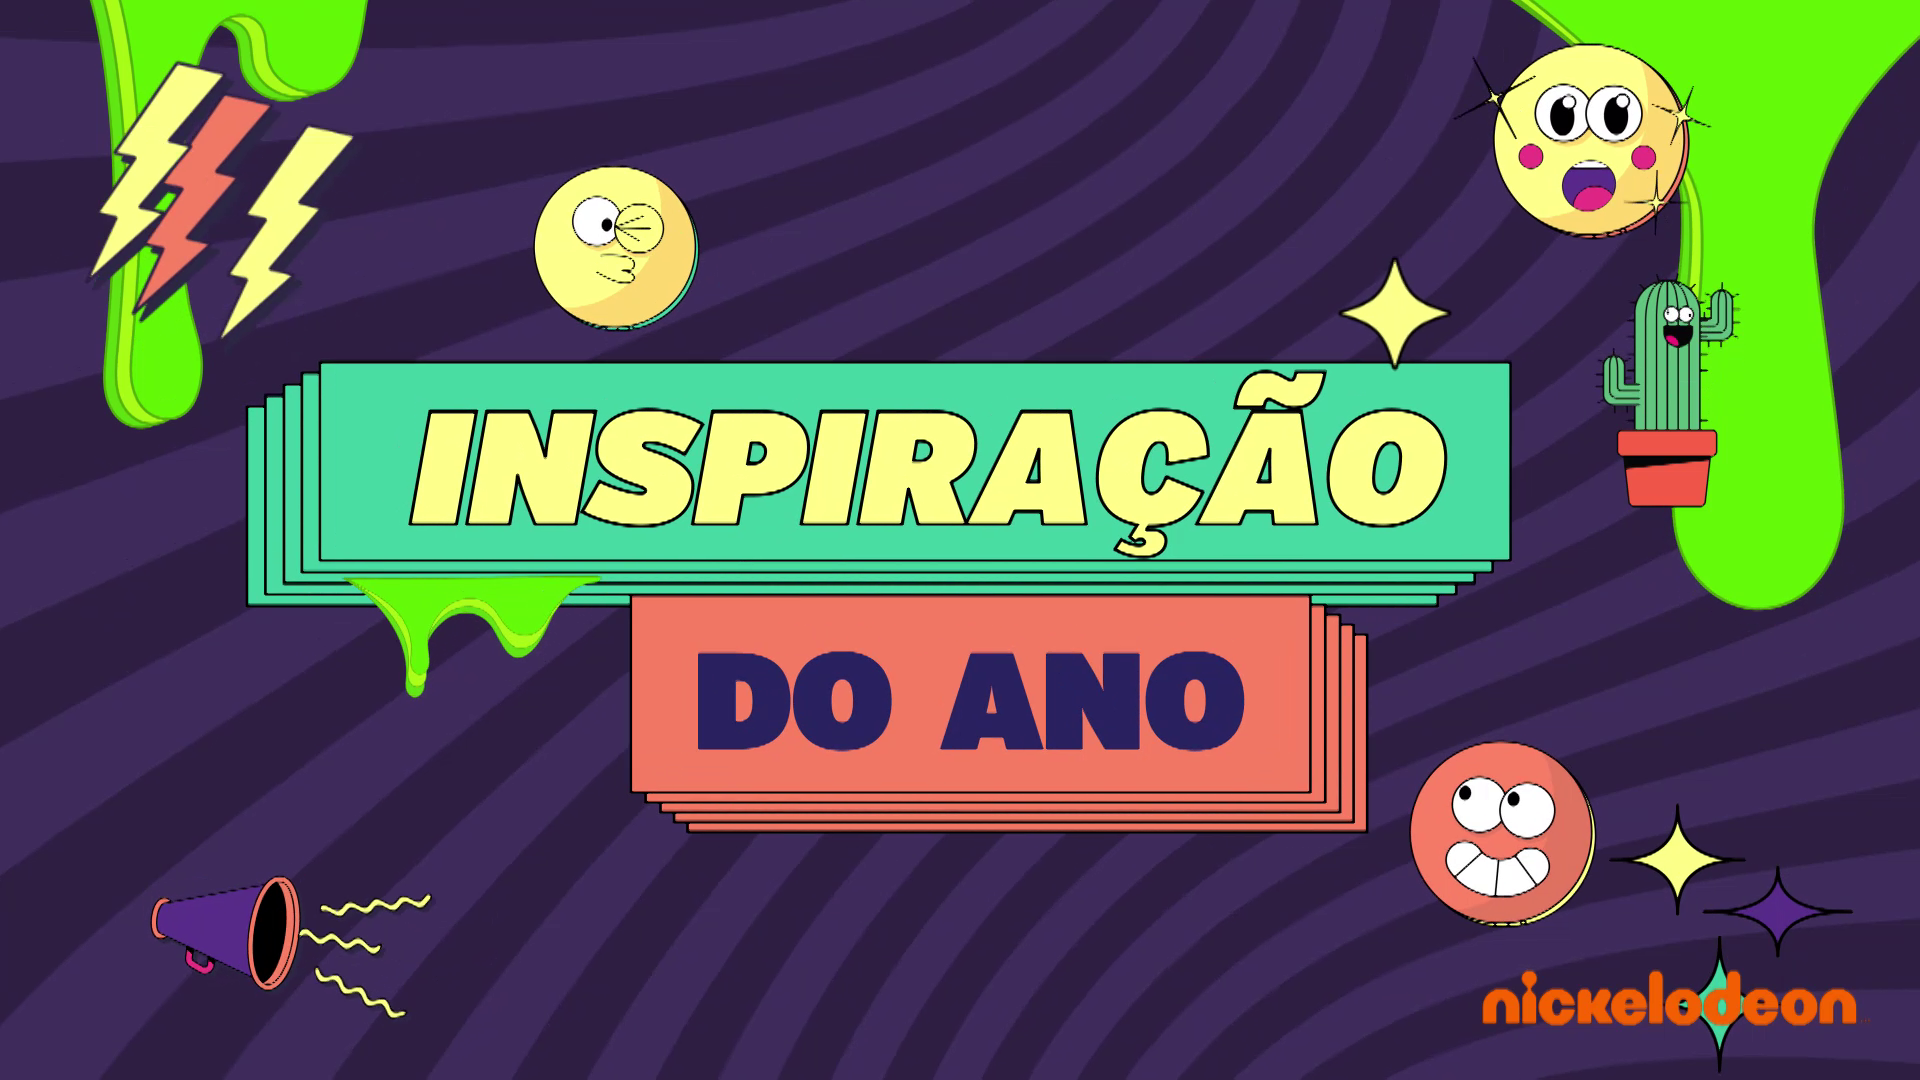 NickALive!: Nickelodeon Brazil Announces Meus Prêmios Nick 2019 Winners